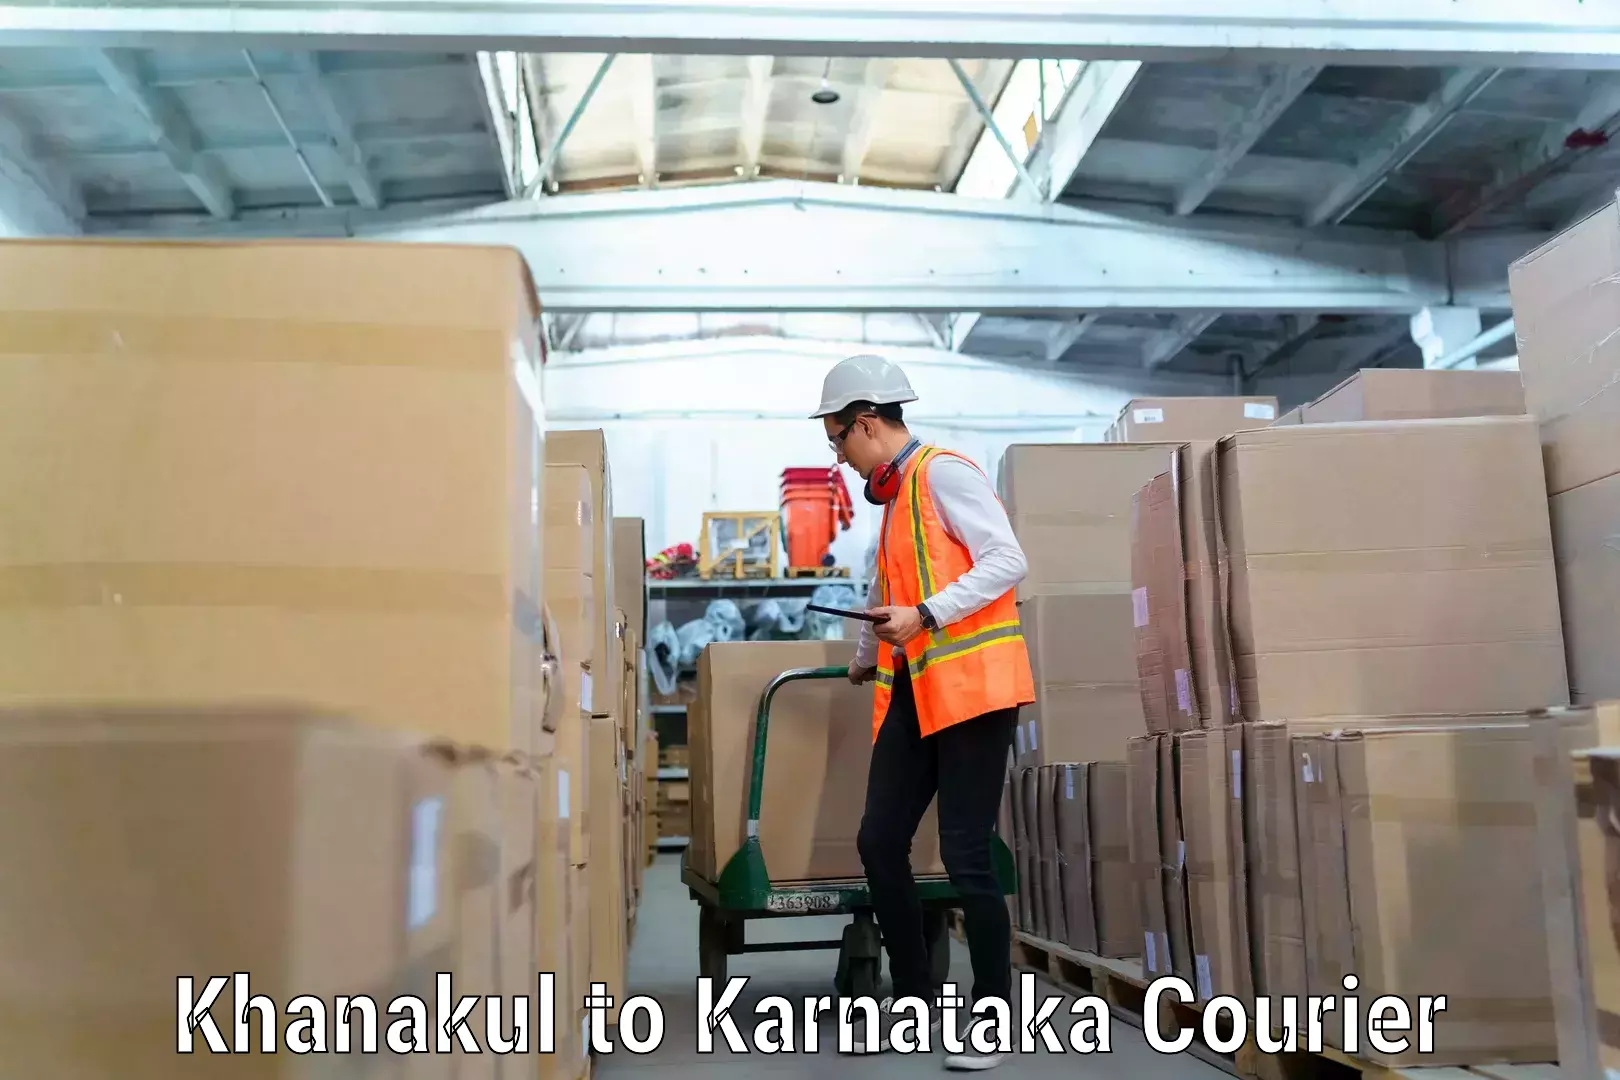 Trusted relocation experts Khanakul to Karnataka